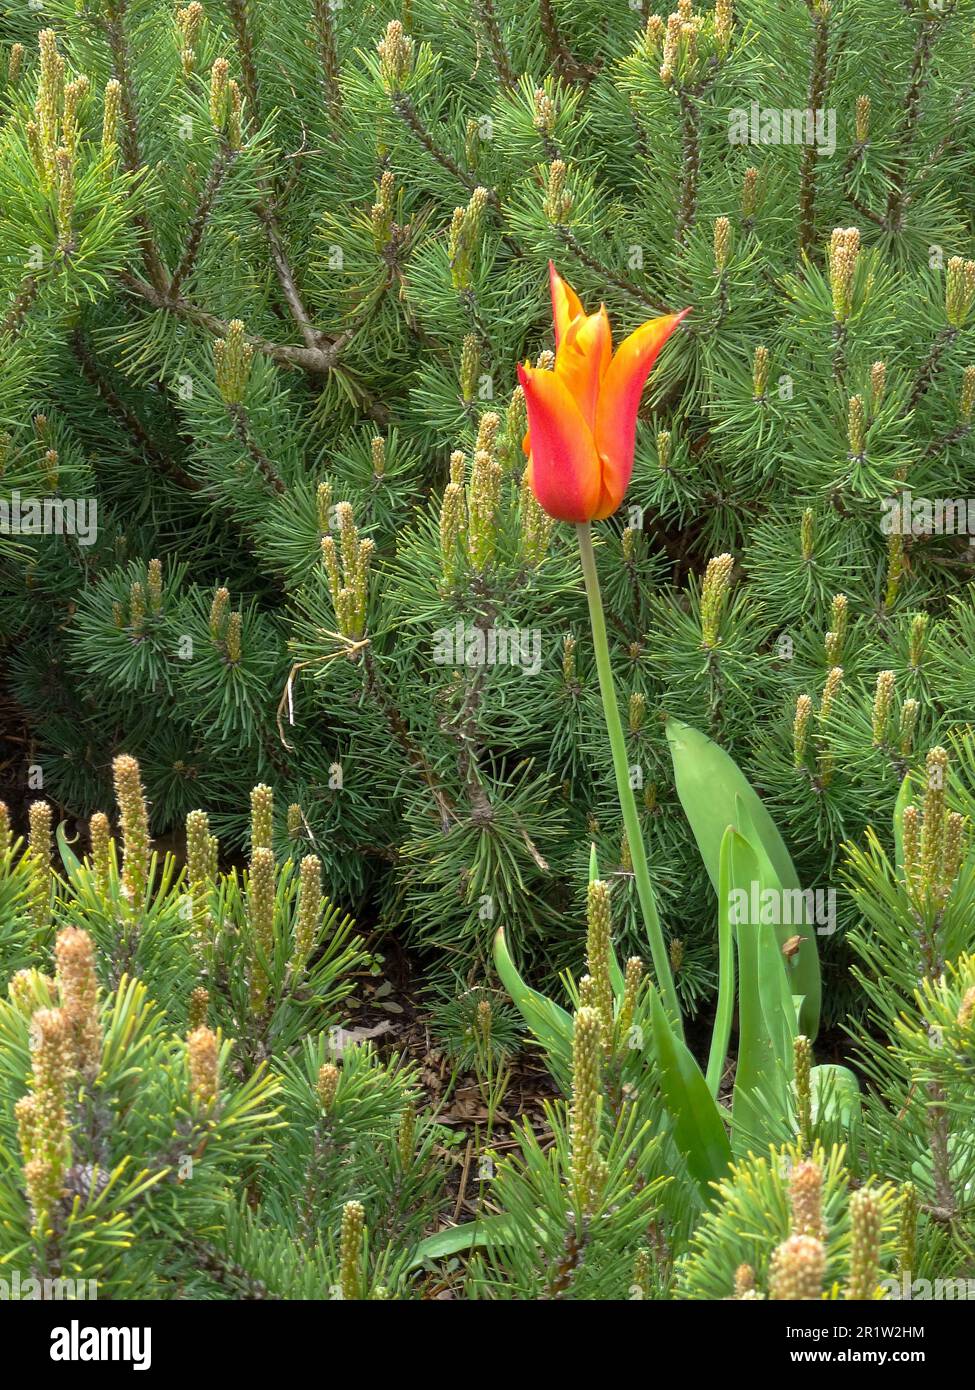 Pinus mugo (Pumilio Group) 'Emerald Dwarf’, and single Tulipa ballerina basking in spring sunshine. natural close up plant portrait Stock Photo